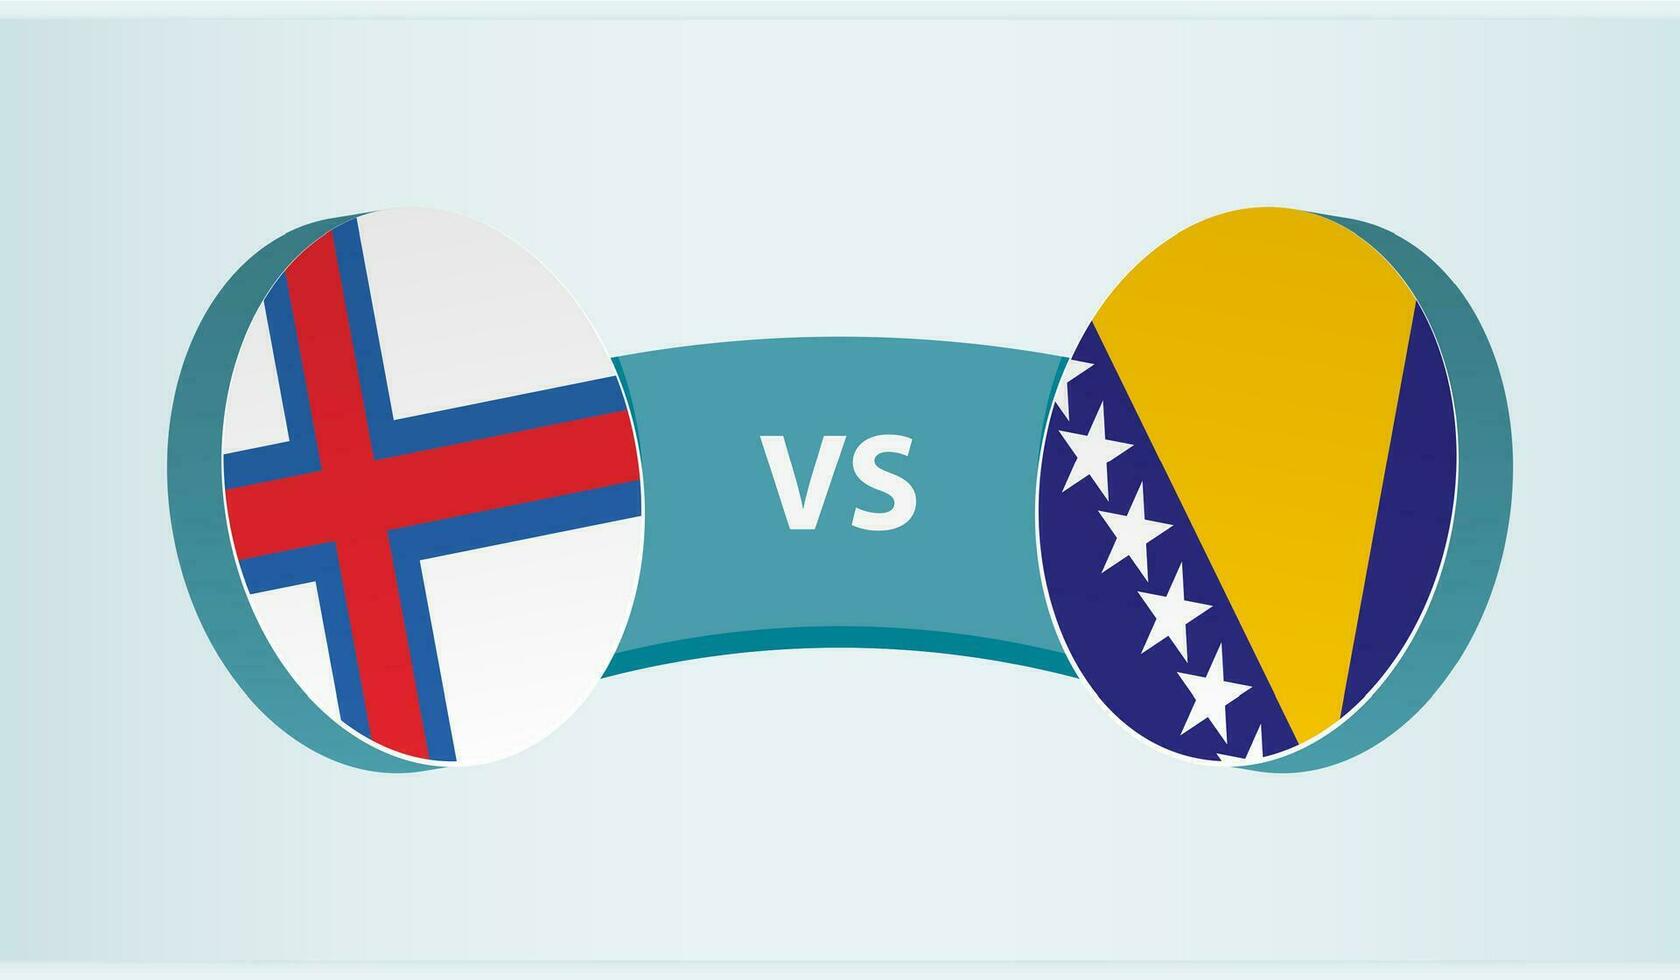 Faroe Islands versus Bosnia and Herzegovina, team sports competition concept. vector